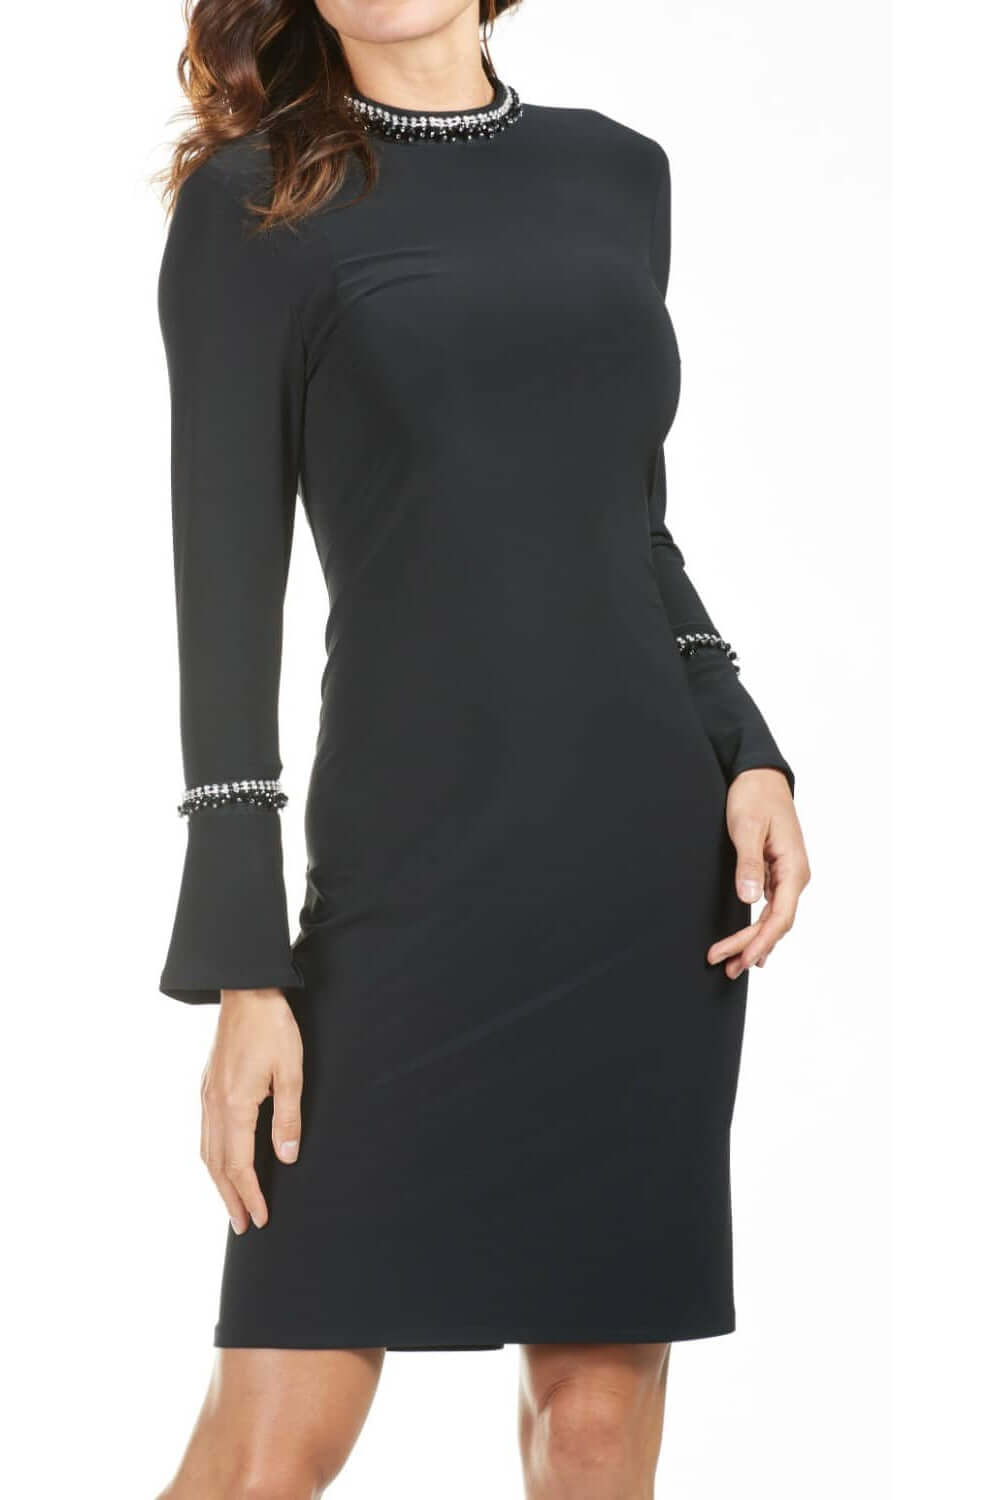 Frank Lyman Dress Style 185022 Black Belle Mia Boutique